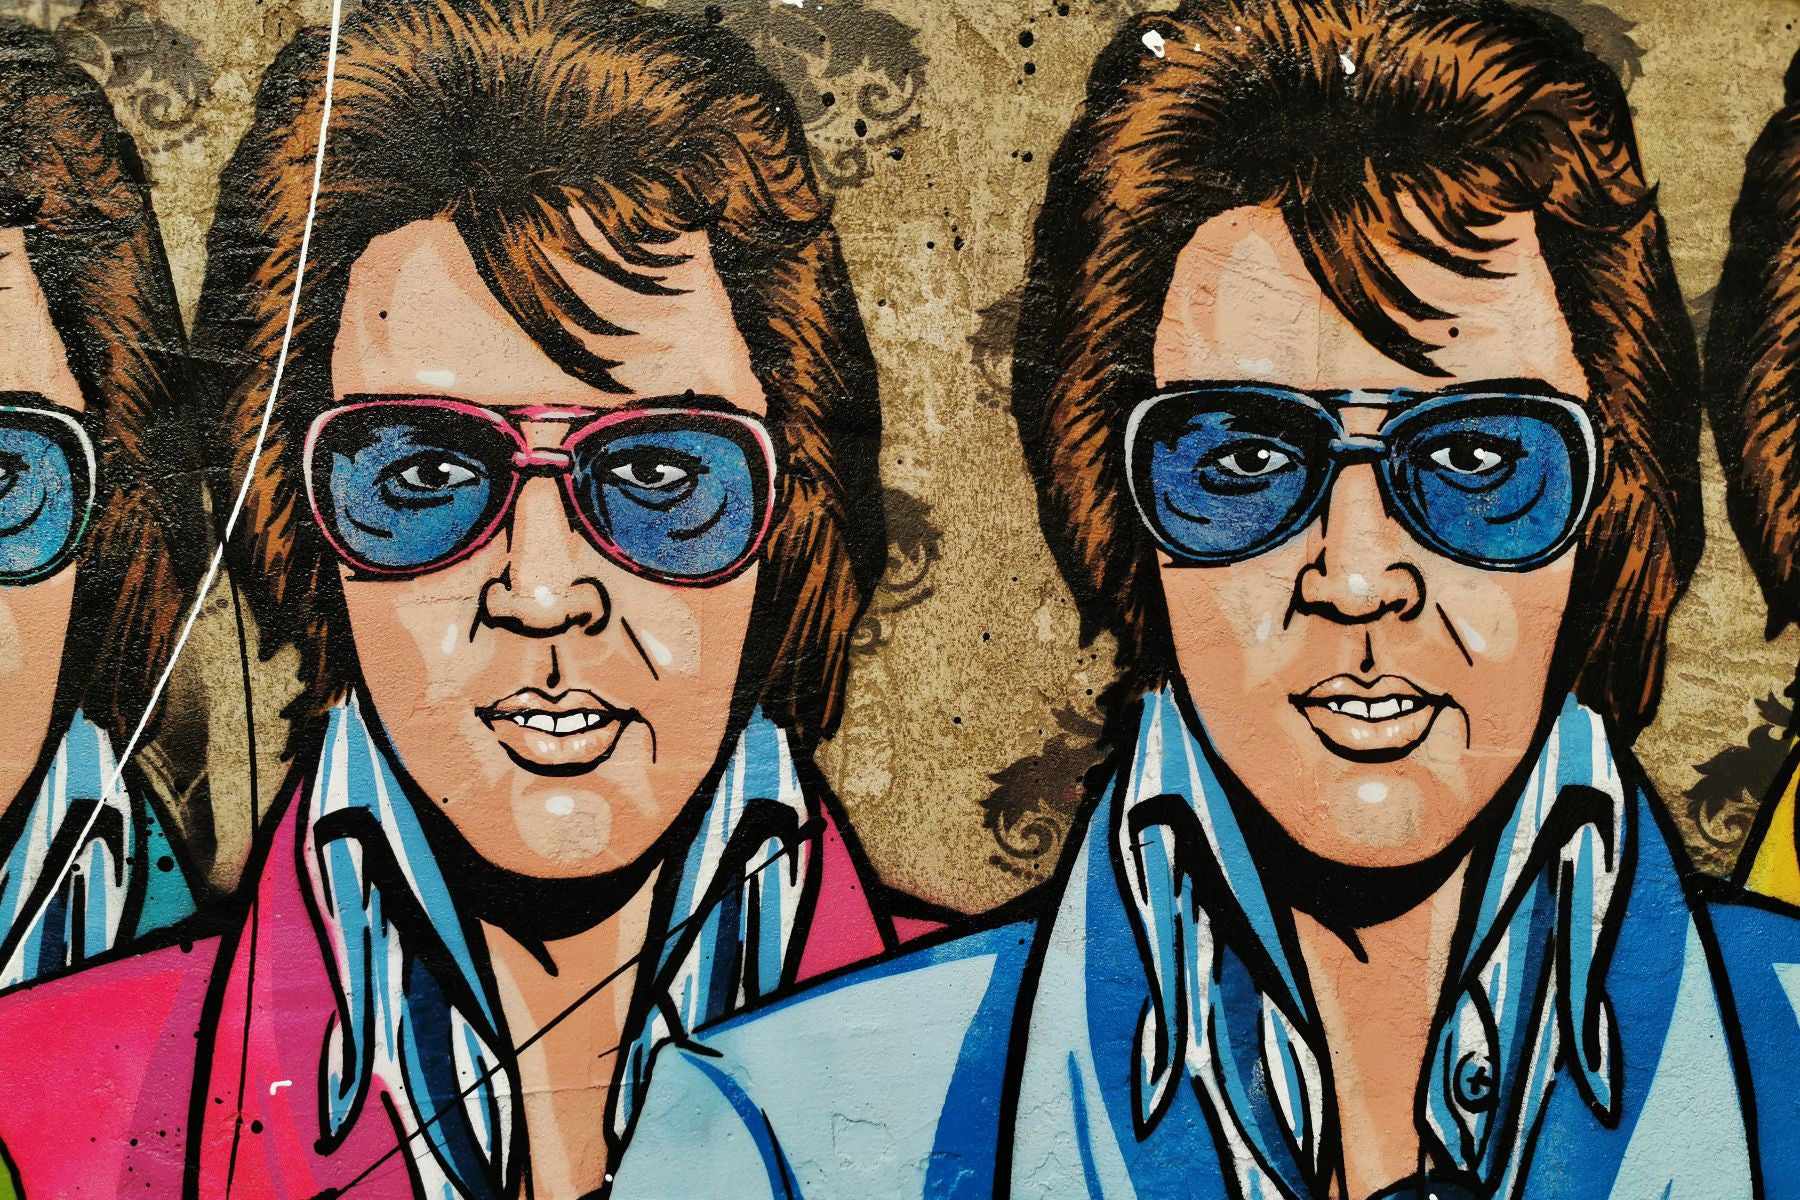 The 6 Faces of Elvis 200cm x 80cm Elvis Presley Industrial Concrete Urban Pop Painting (SOLD)